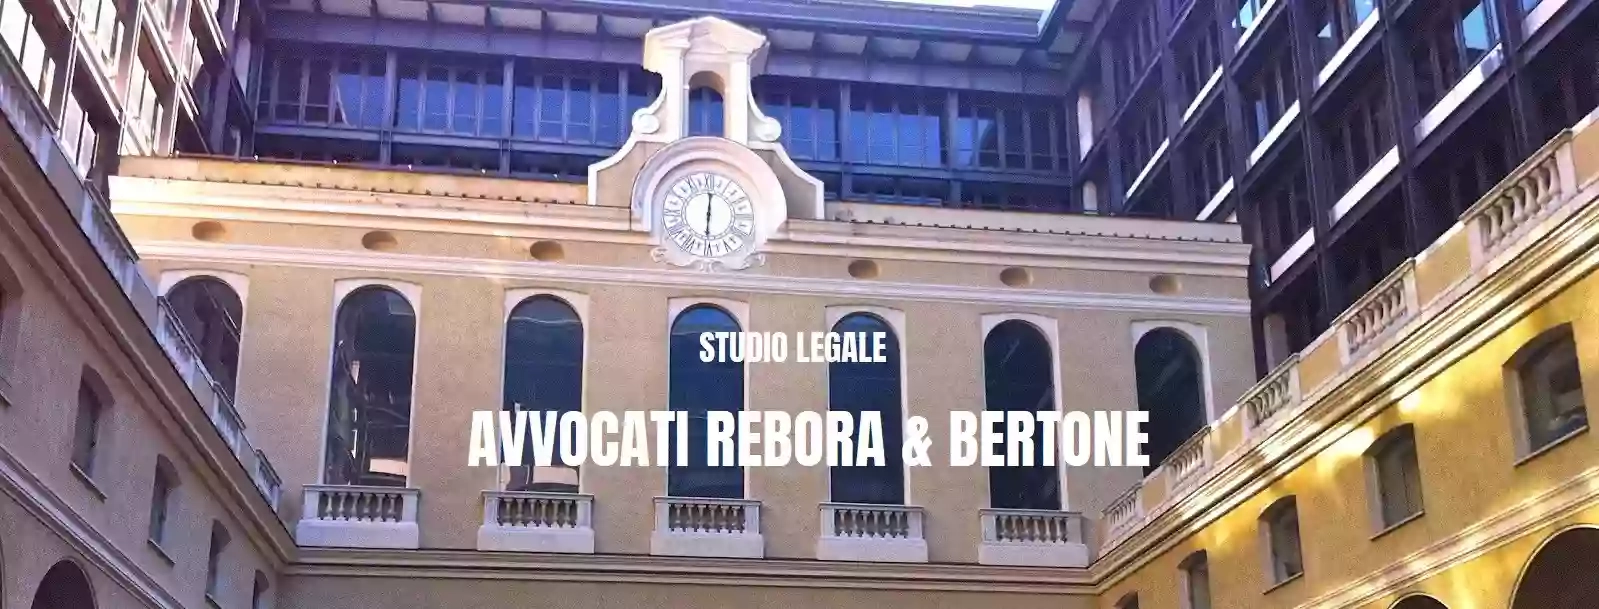 Studio Legale Avvocati Rebora & Bertone